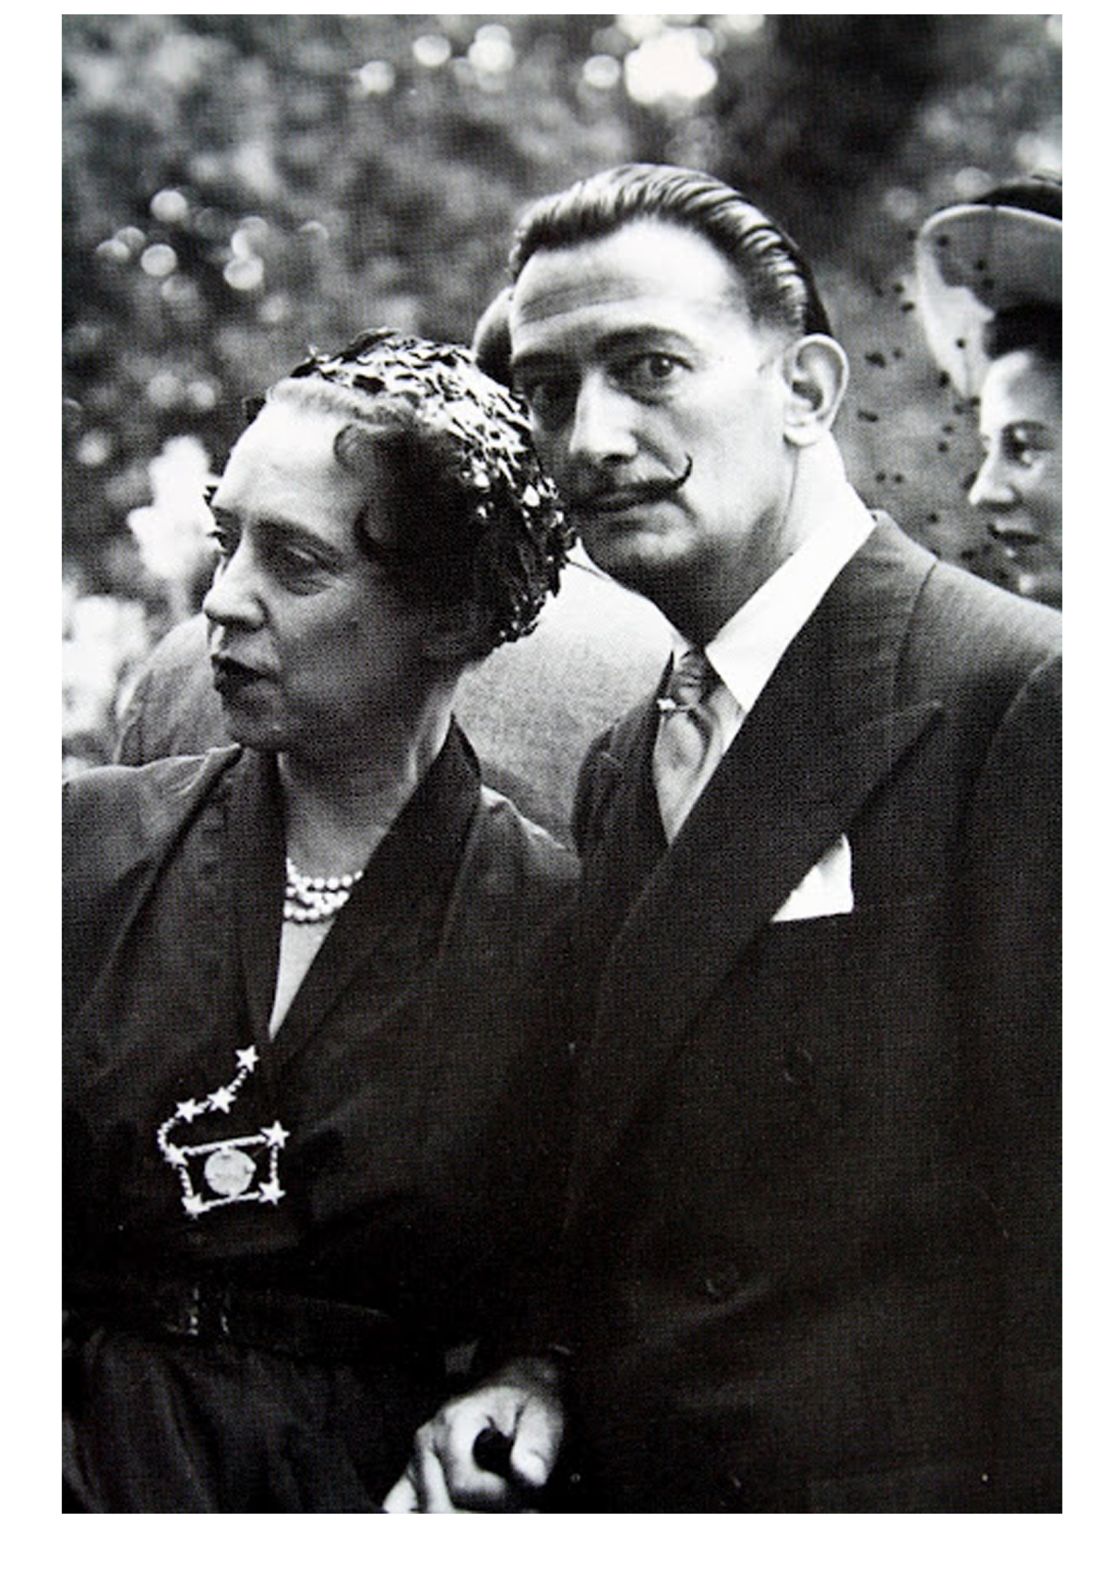 Elsa Schiaparelli and Salvador Dalí in 1949.